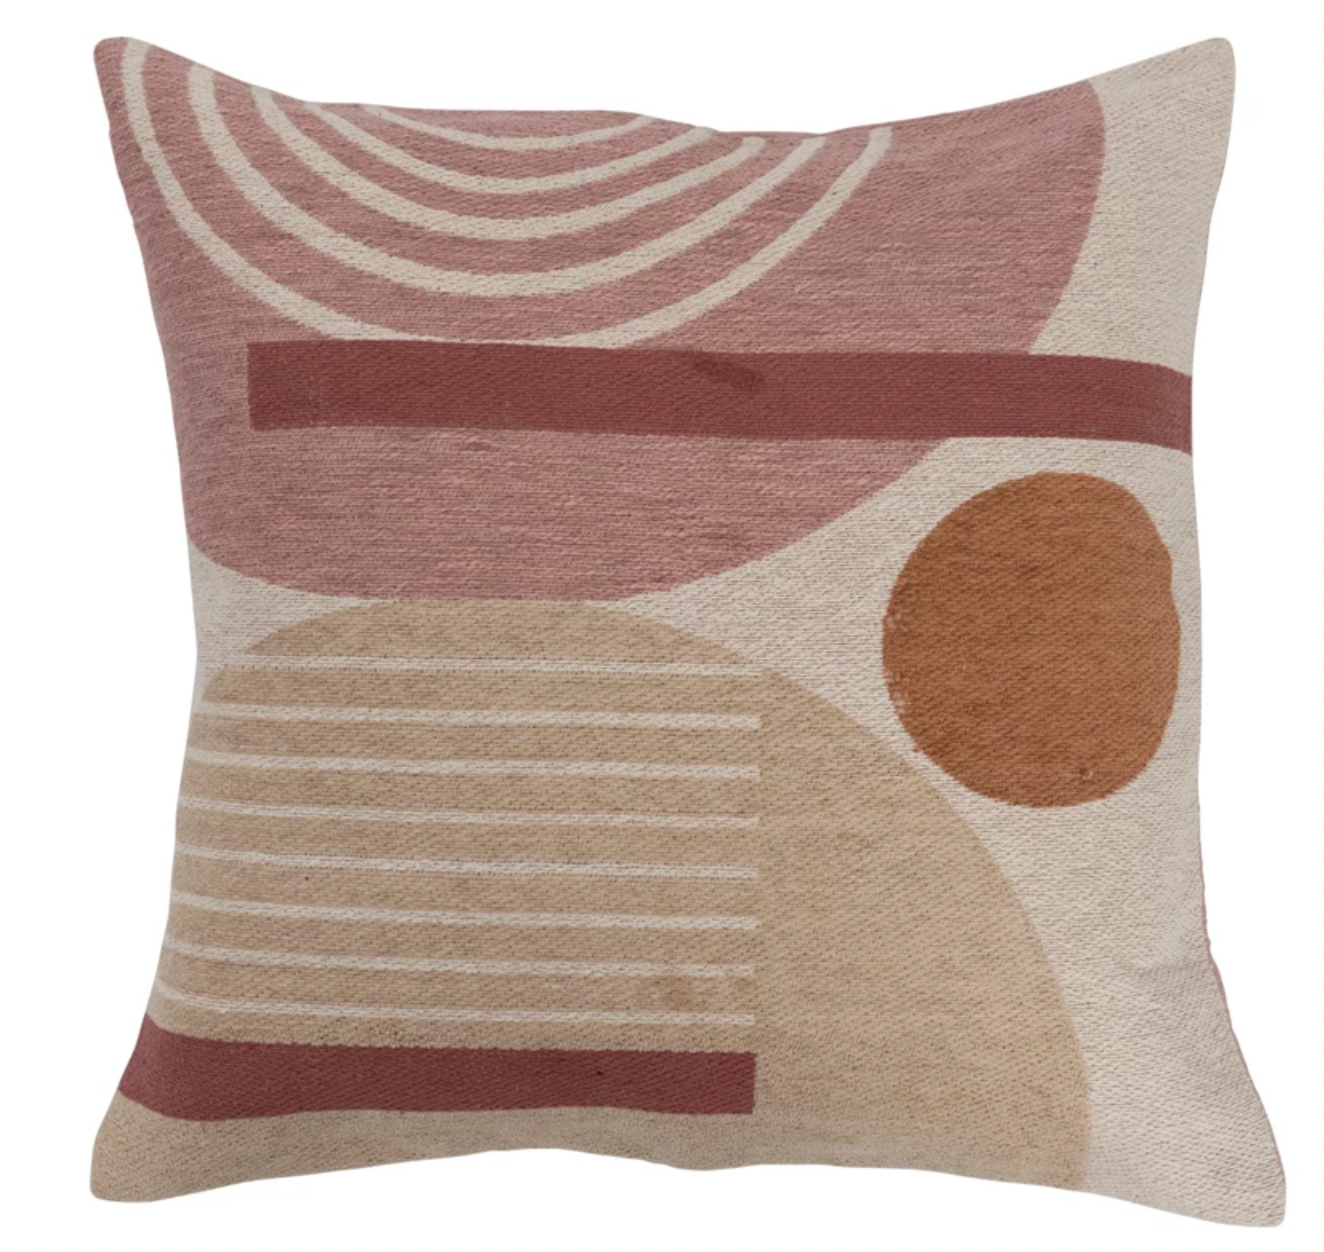 Woven Cotton Blend Pillow w/ Abstract Design